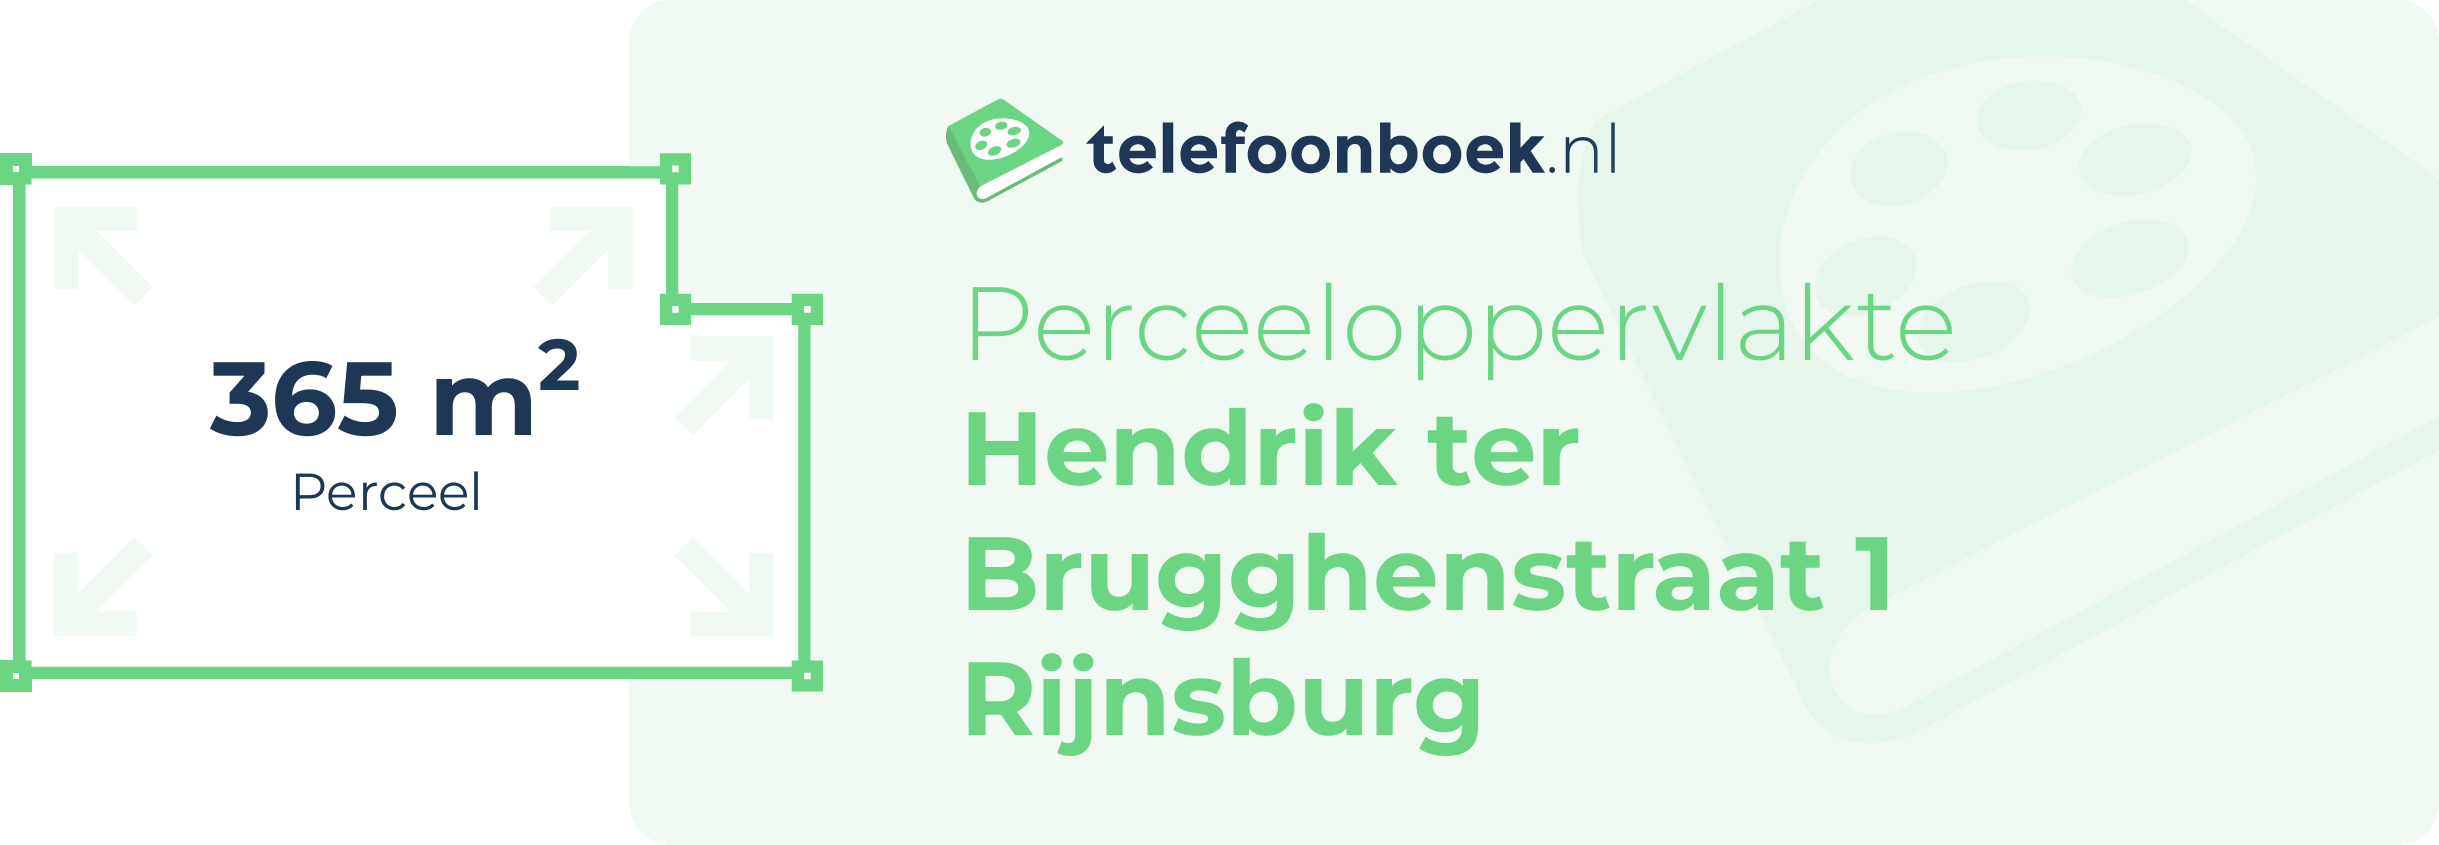 Perceeloppervlakte Hendrik Ter Brugghenstraat 1 Rijnsburg